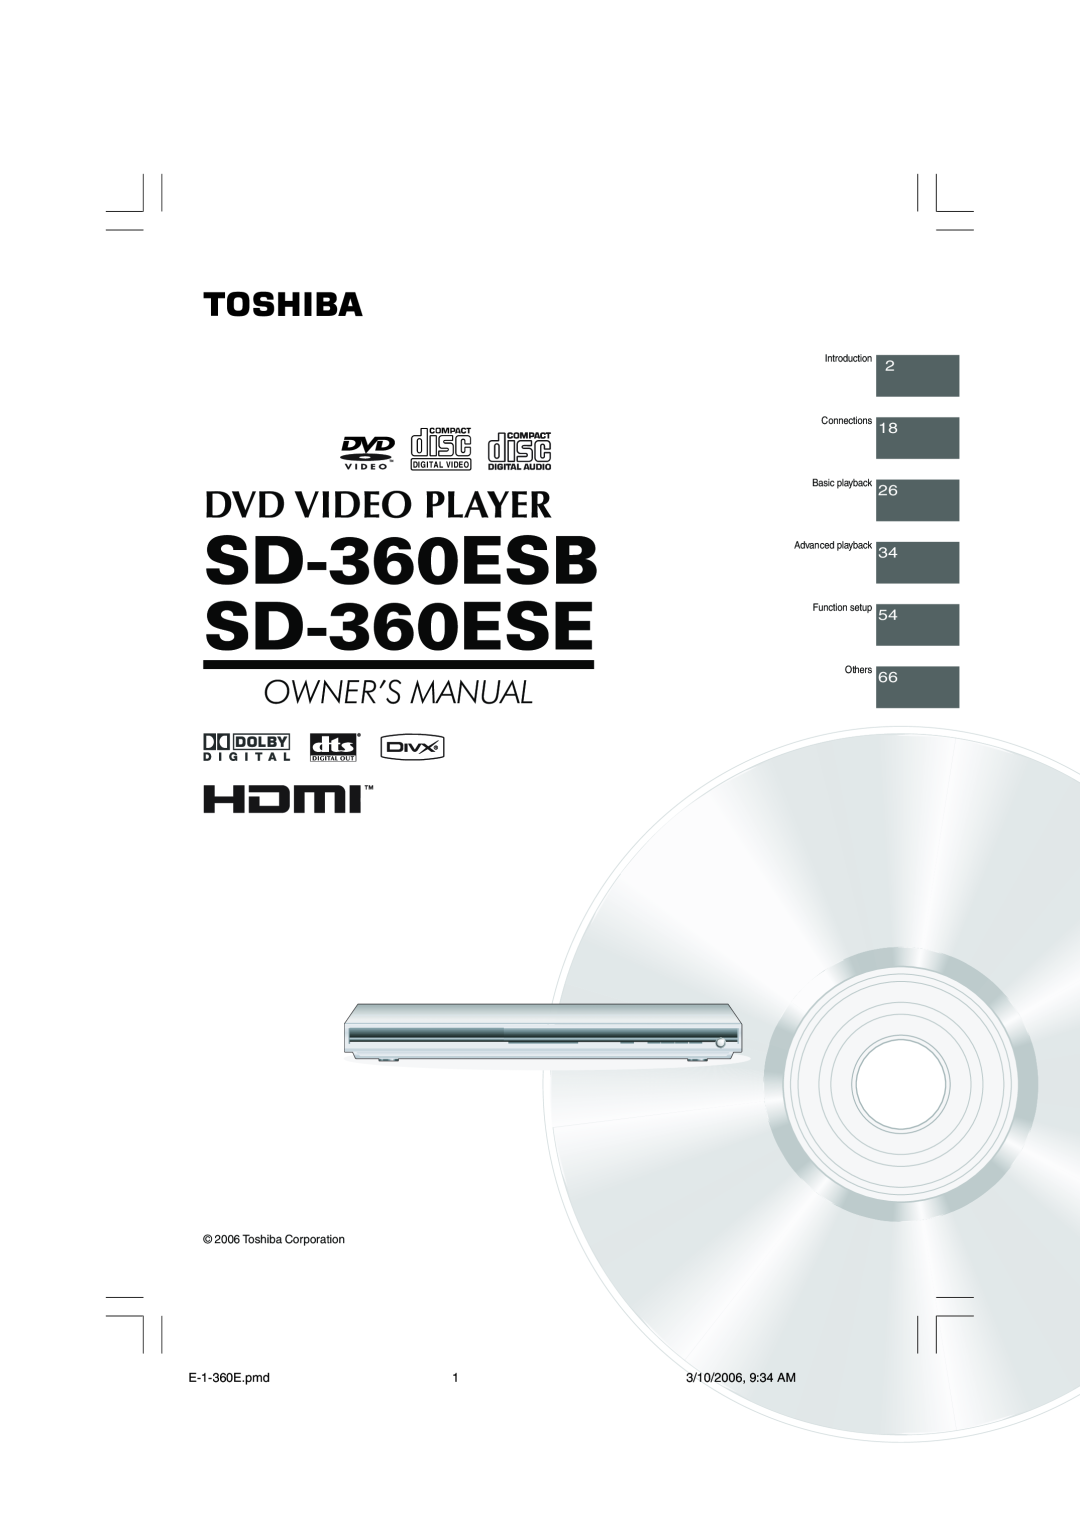 Toshiba SD360E owner manual SD-360ESB SD-360ESE, Dvd Video Player, Owner’S Manual, E-1-360E.pmd, 3/10/2006, 934 AM 